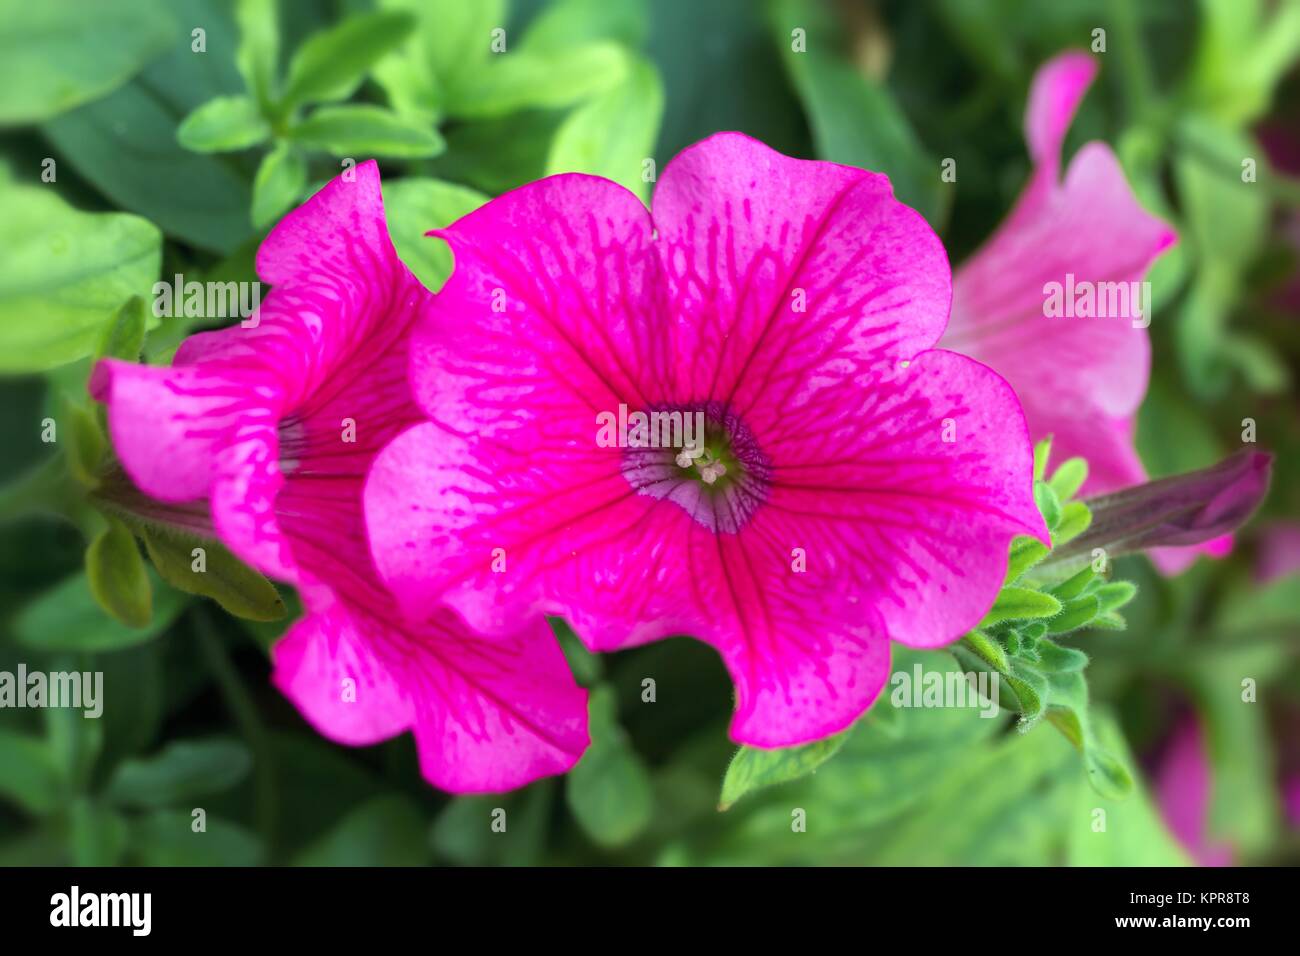 Pinkfarbene Garten-Petunien / Pink garden Petunia Stock Photo